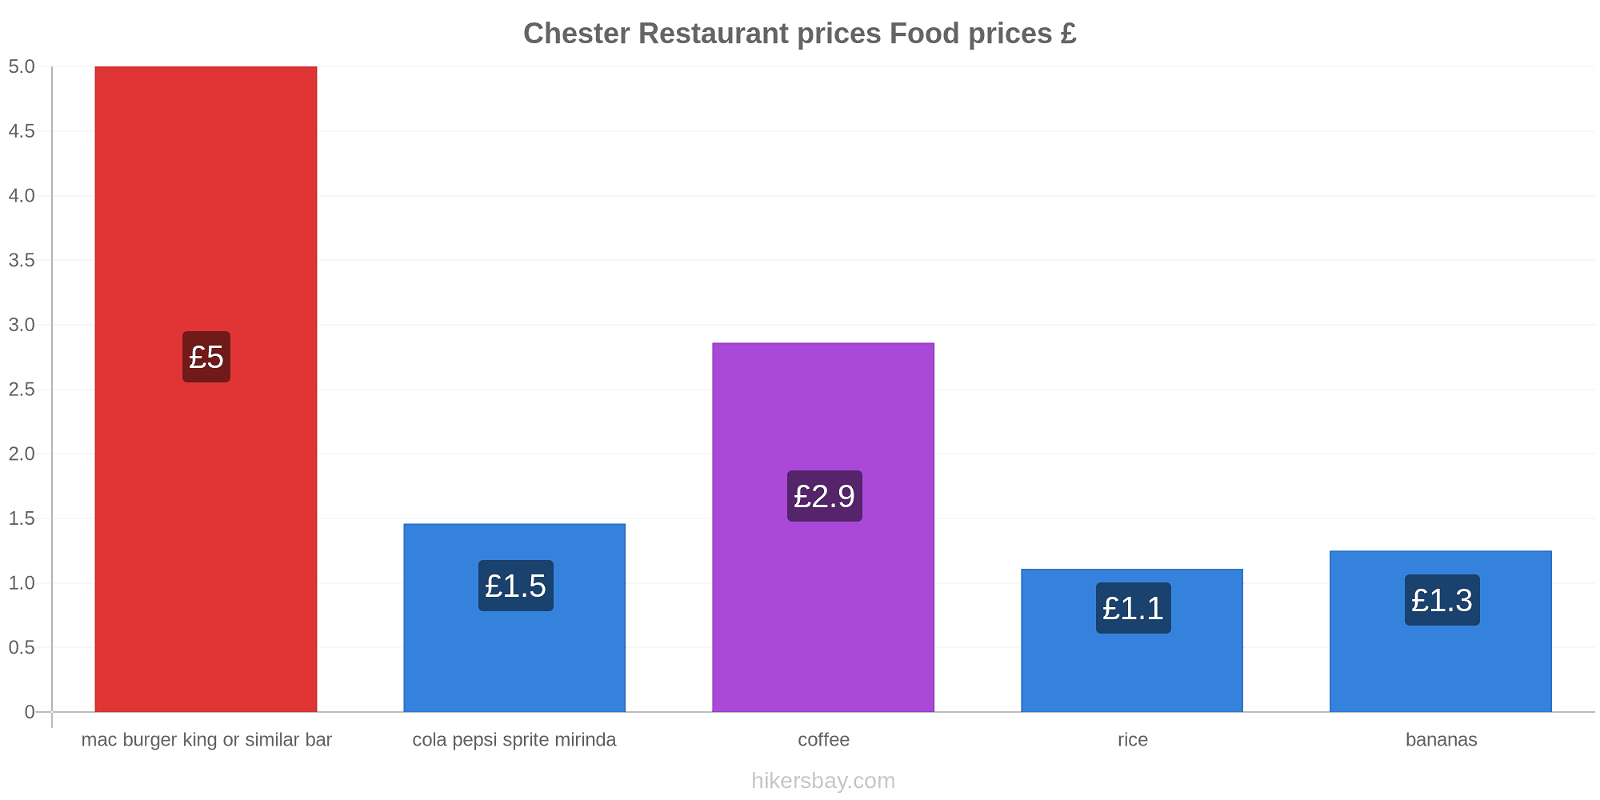 Chester price changes hikersbay.com